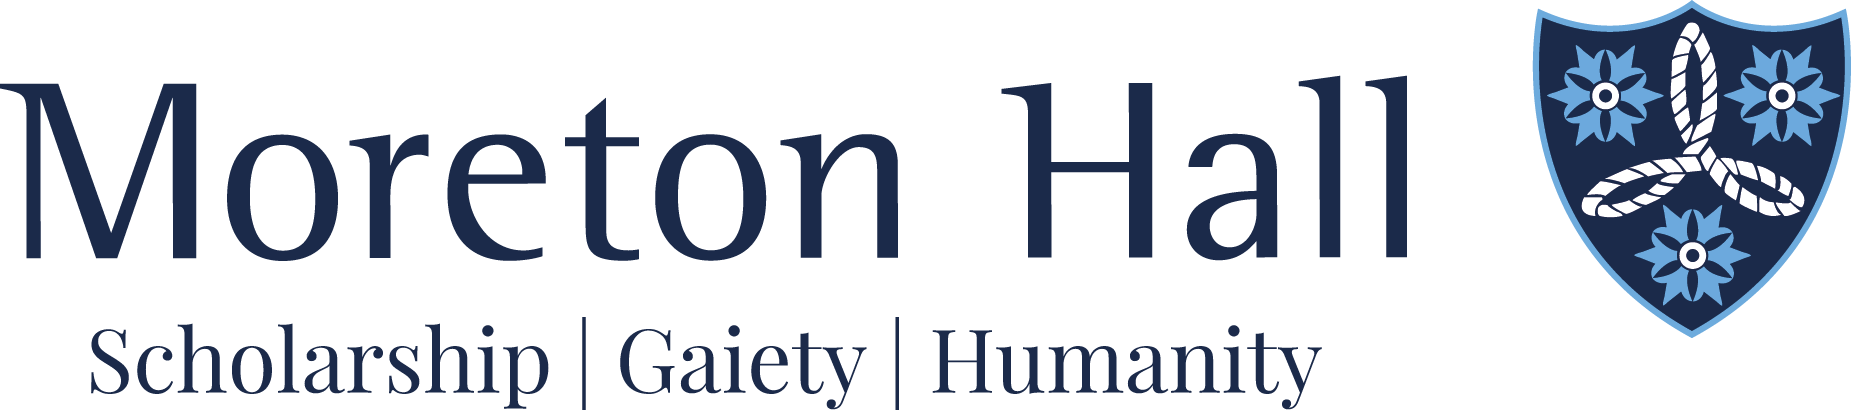 New-Moreton-Hall-logo-2020